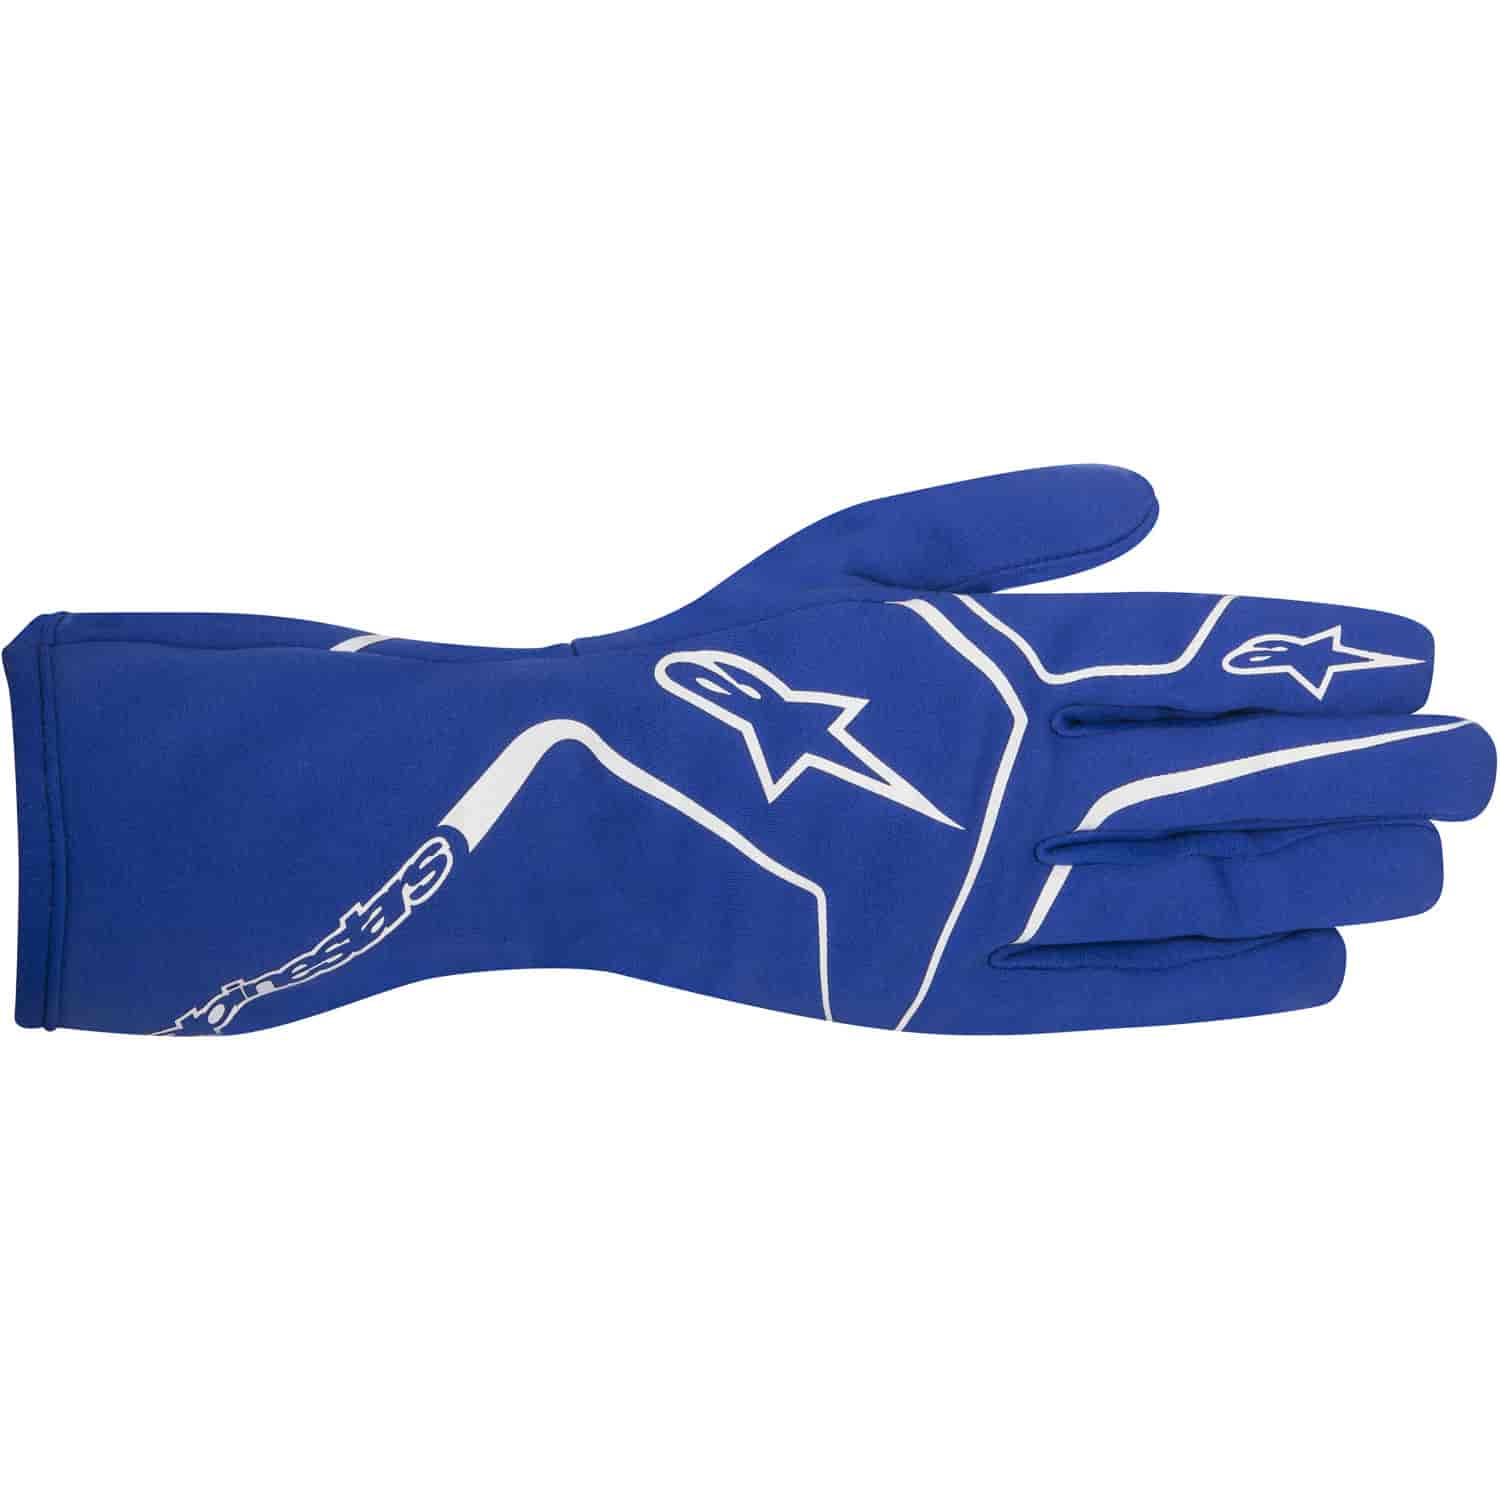 Tech 1-K Race S Youth Gloves Blue